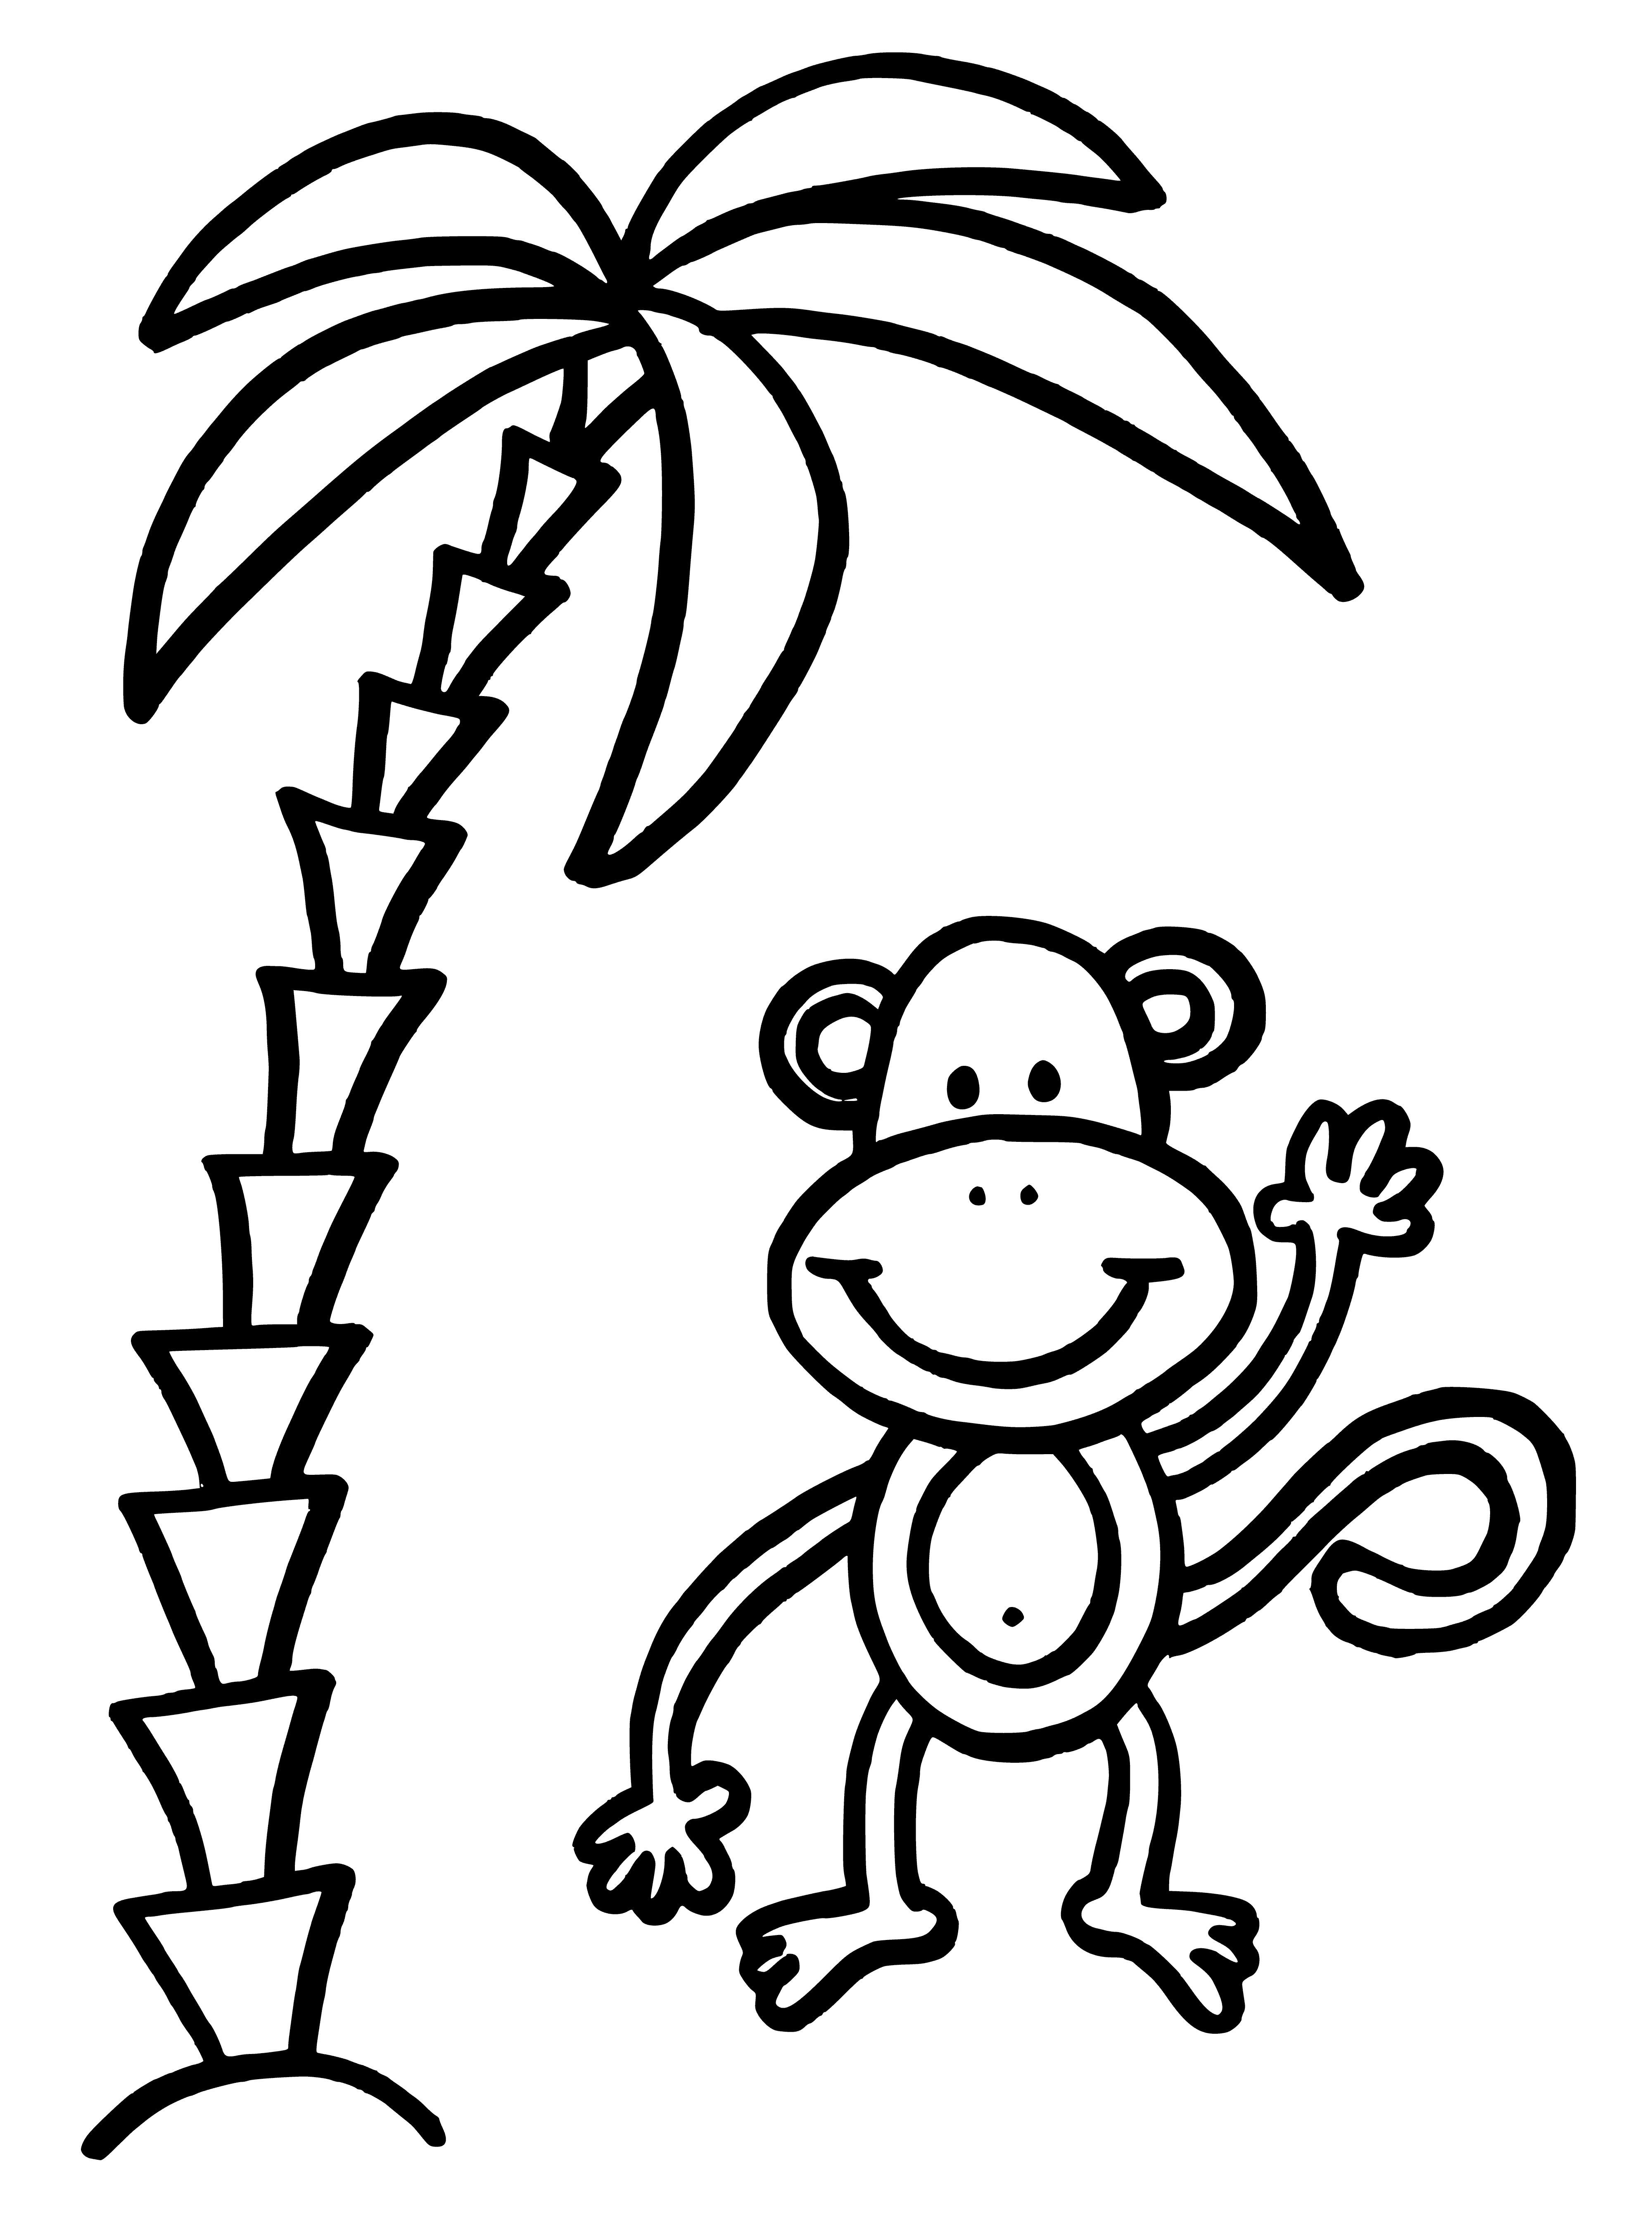 Monkey near palm tree coloring page